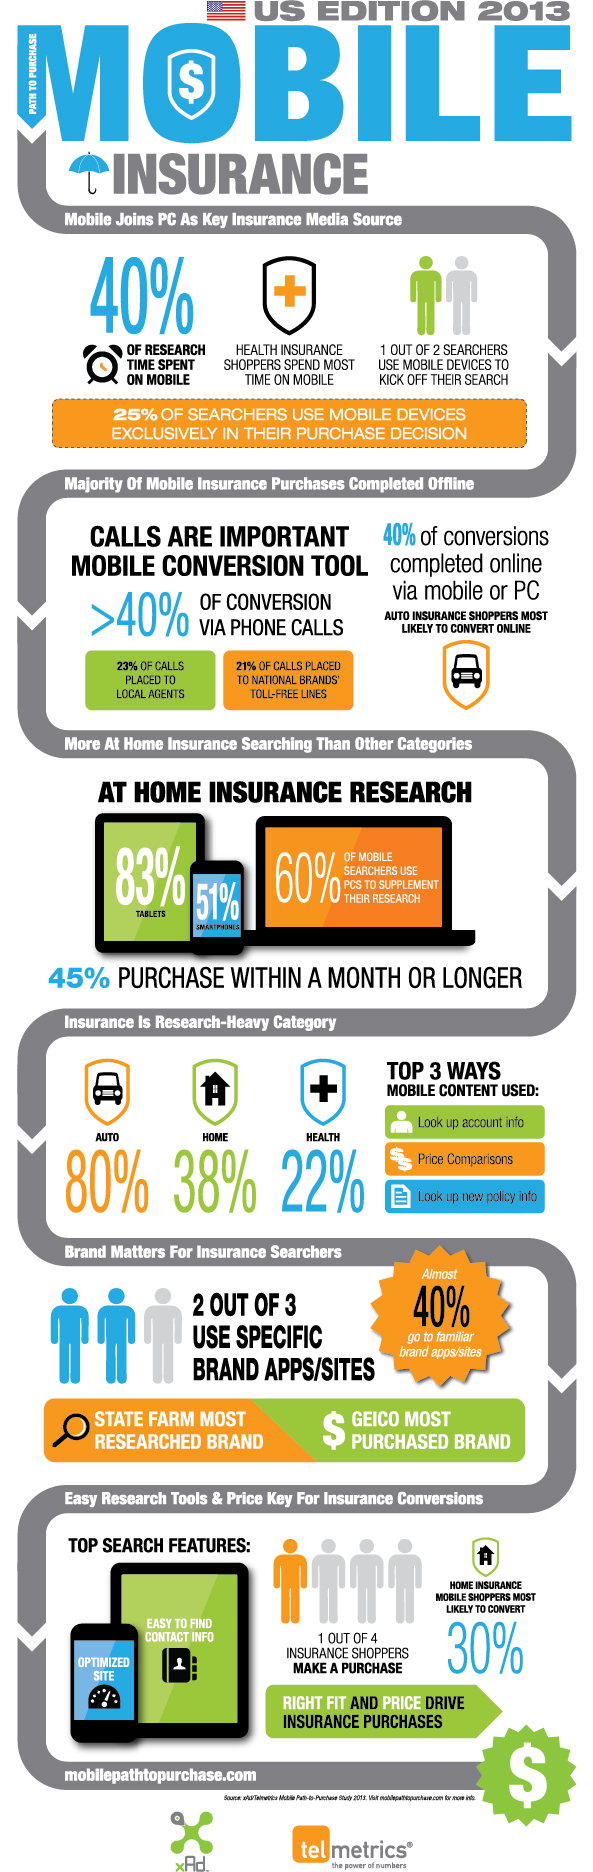 xAd/Telmetrics Mobile Path-to-Purchase Infographic - Insurance